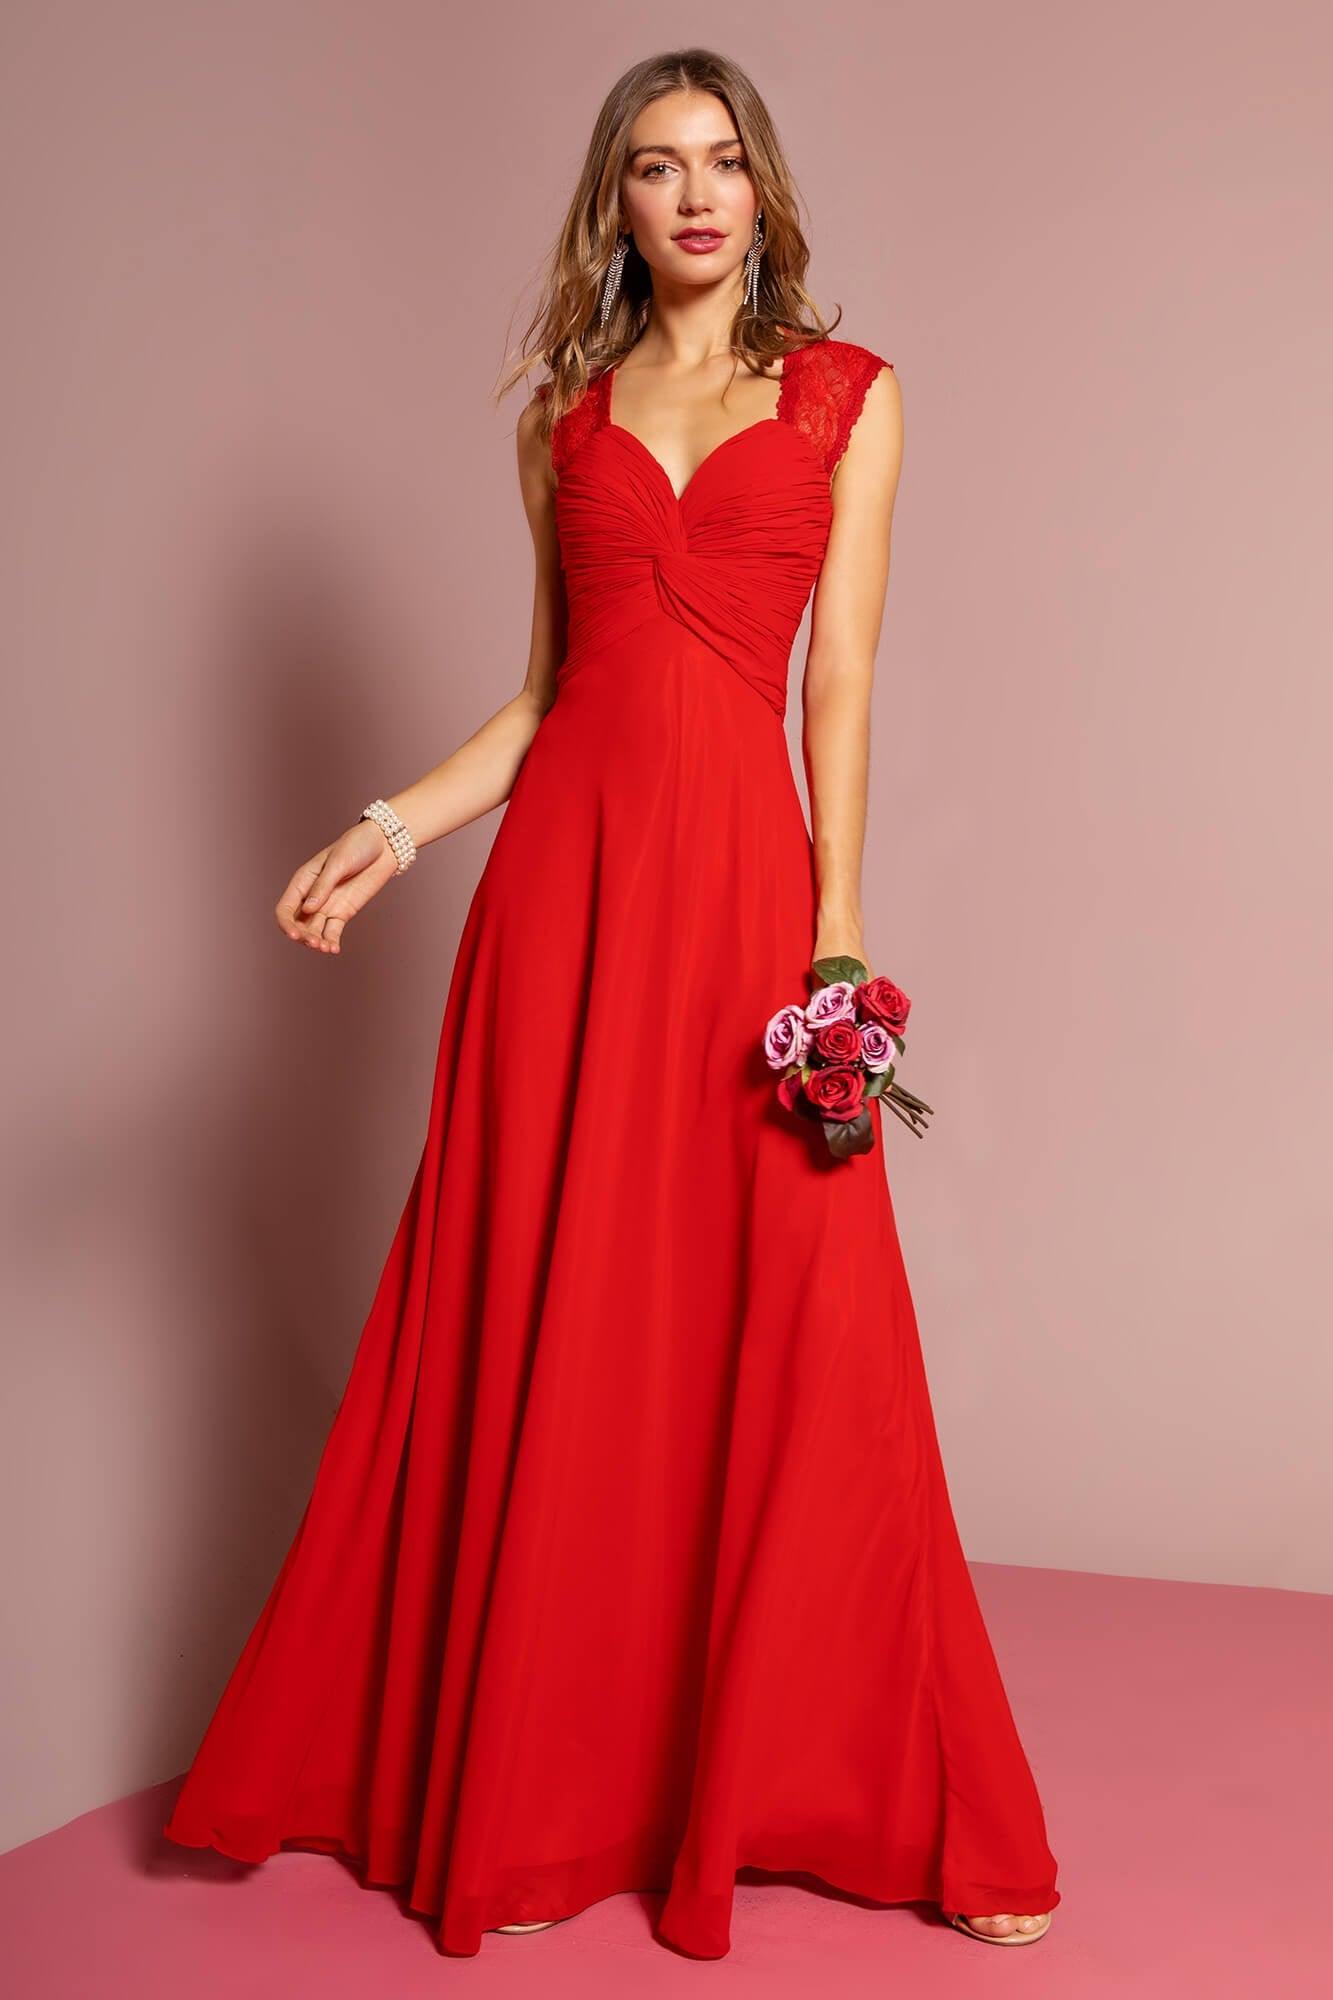 Empire Waist Long Prom Dress Formal - The Dress Outlet Elizabeth K